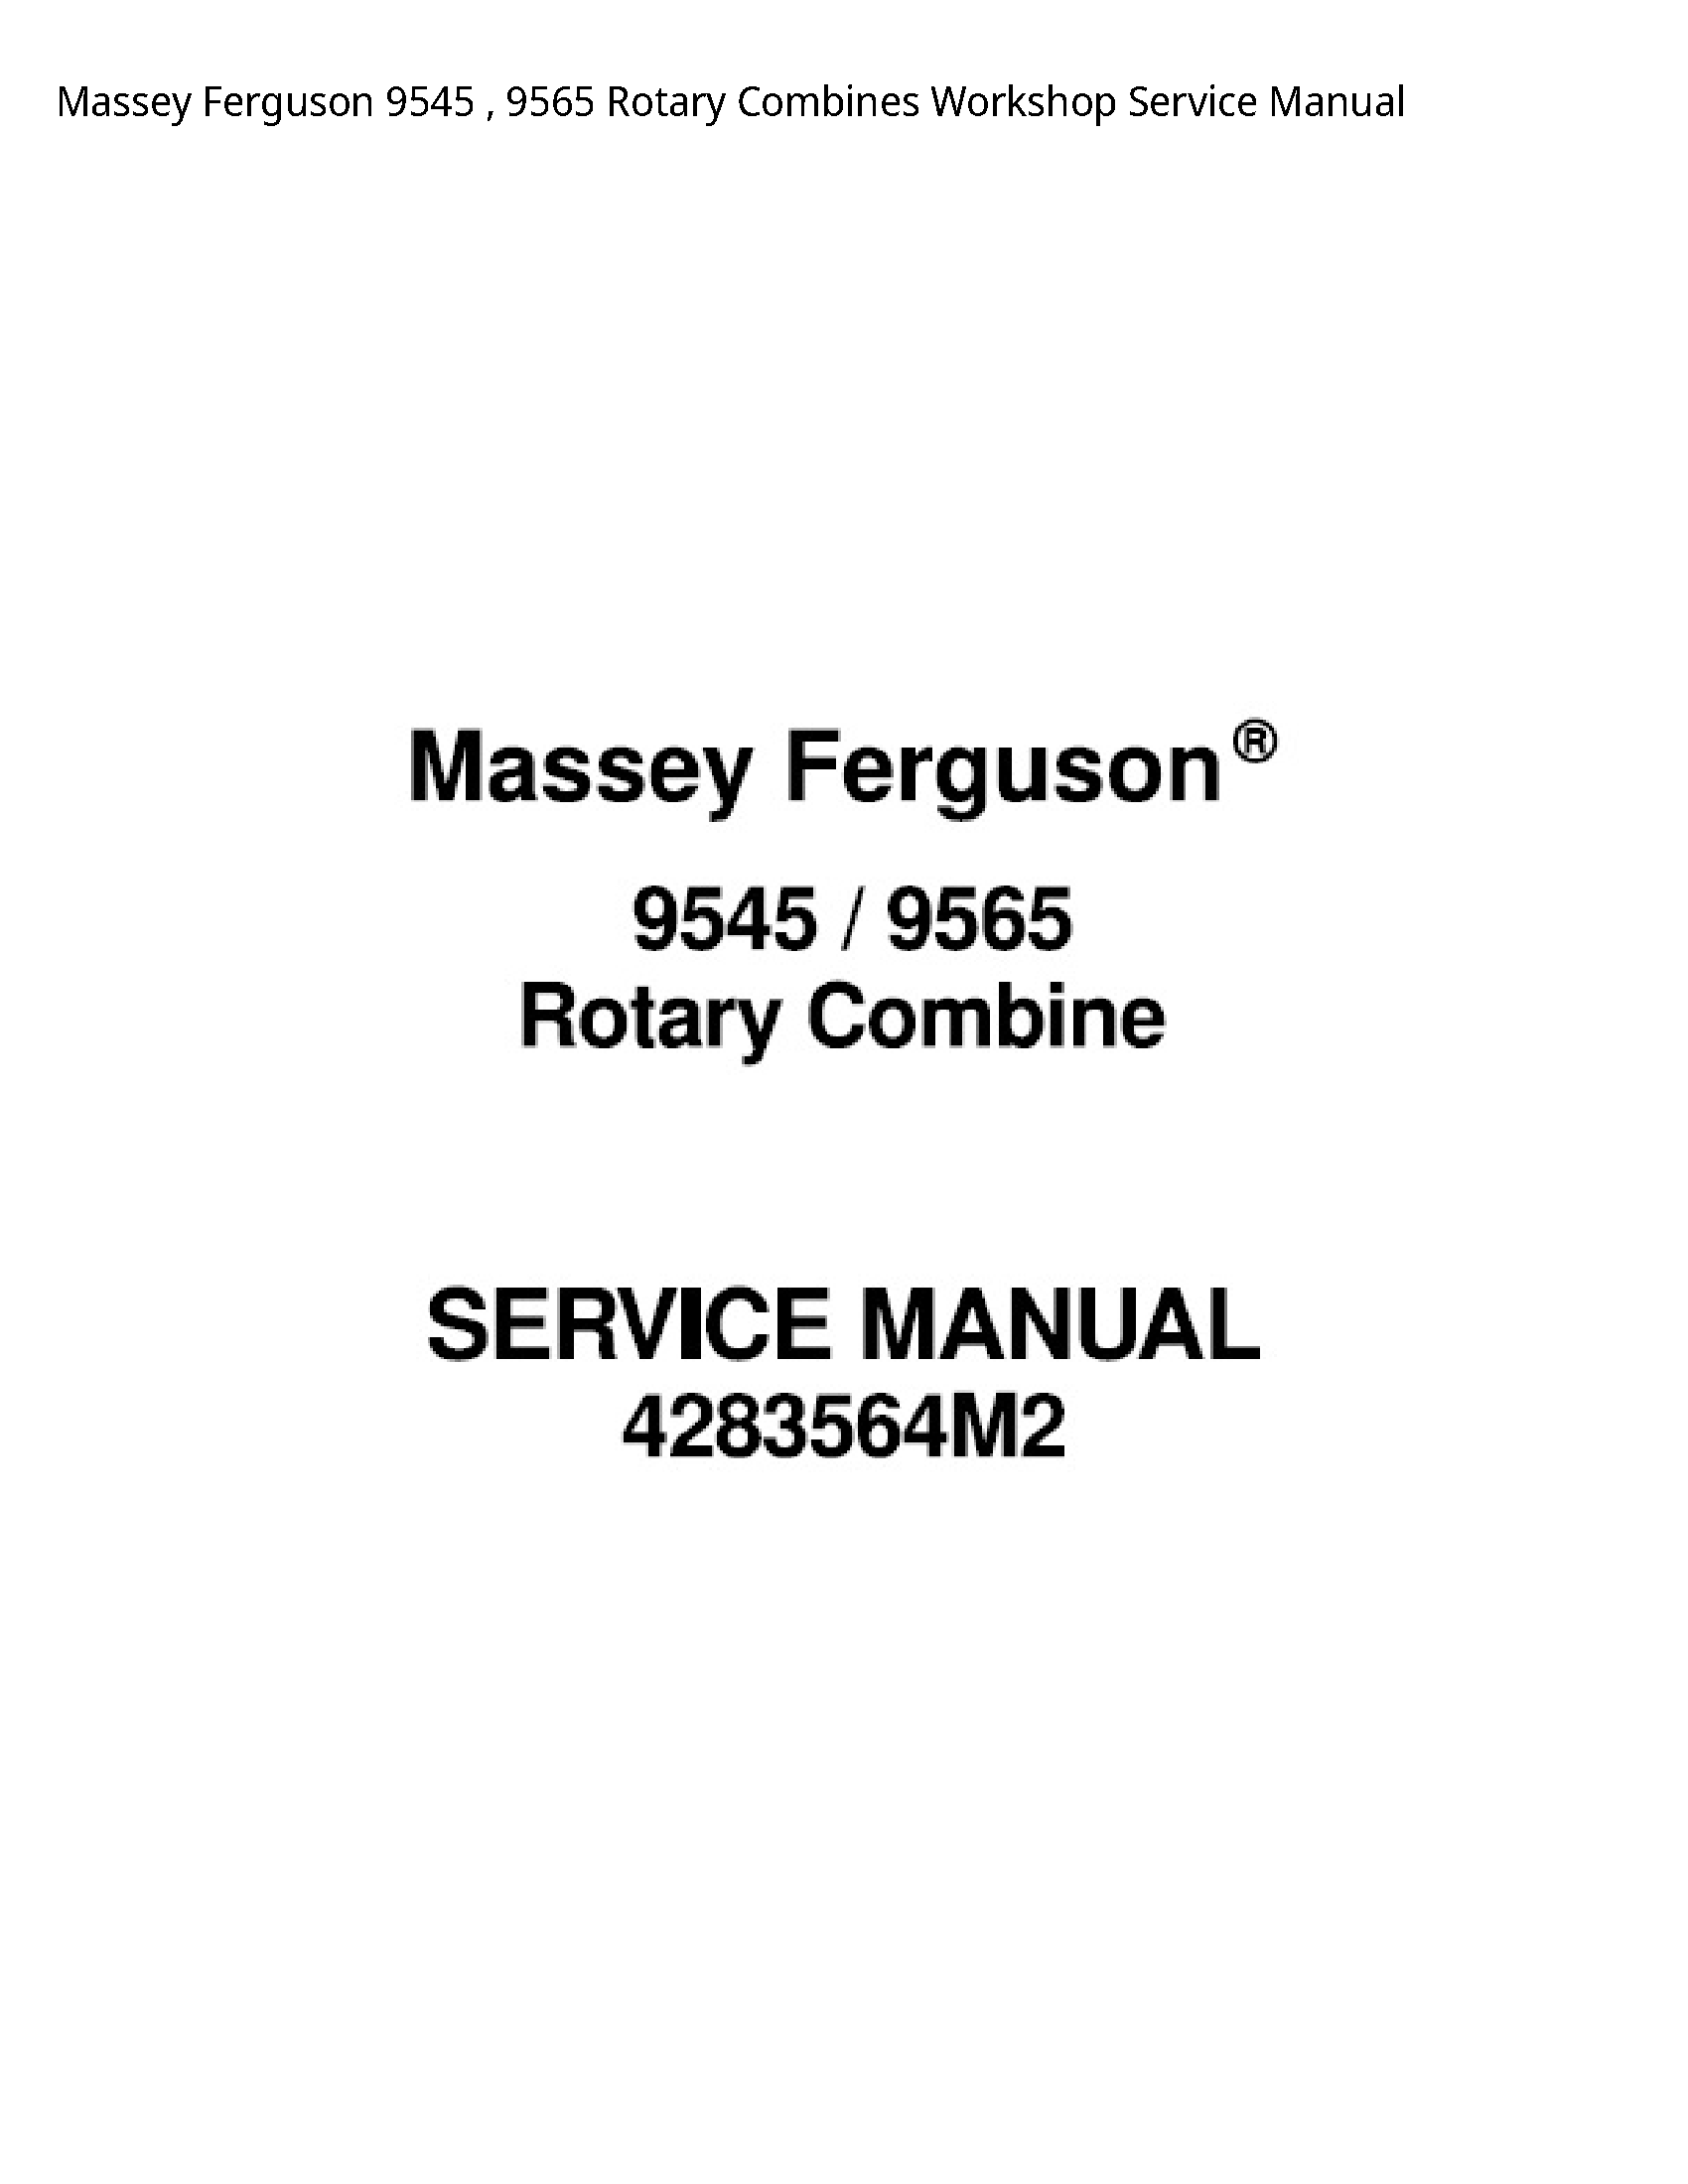 Massey Ferguson 9545 Rotary Combines Service manual